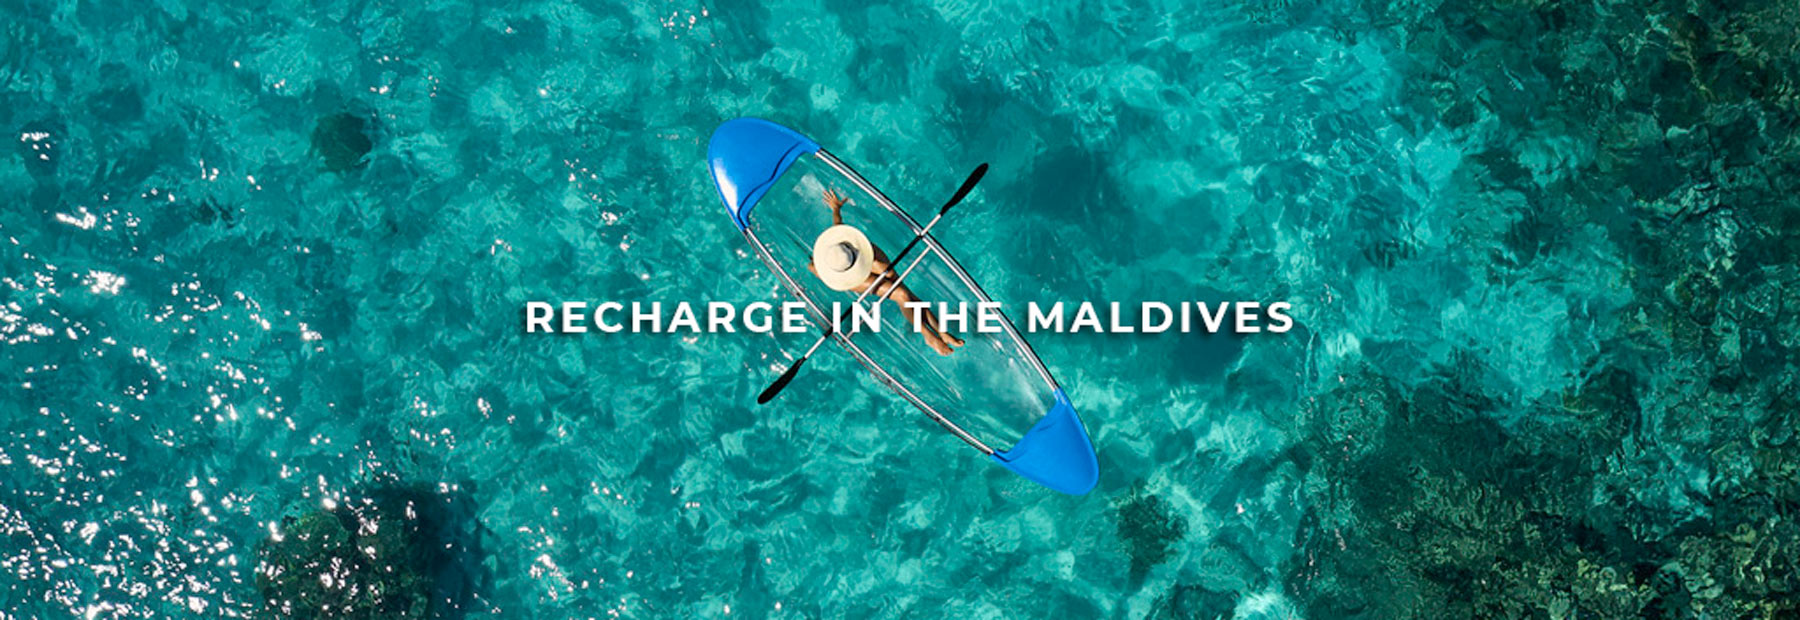 Recharge Maldives 1-jpg